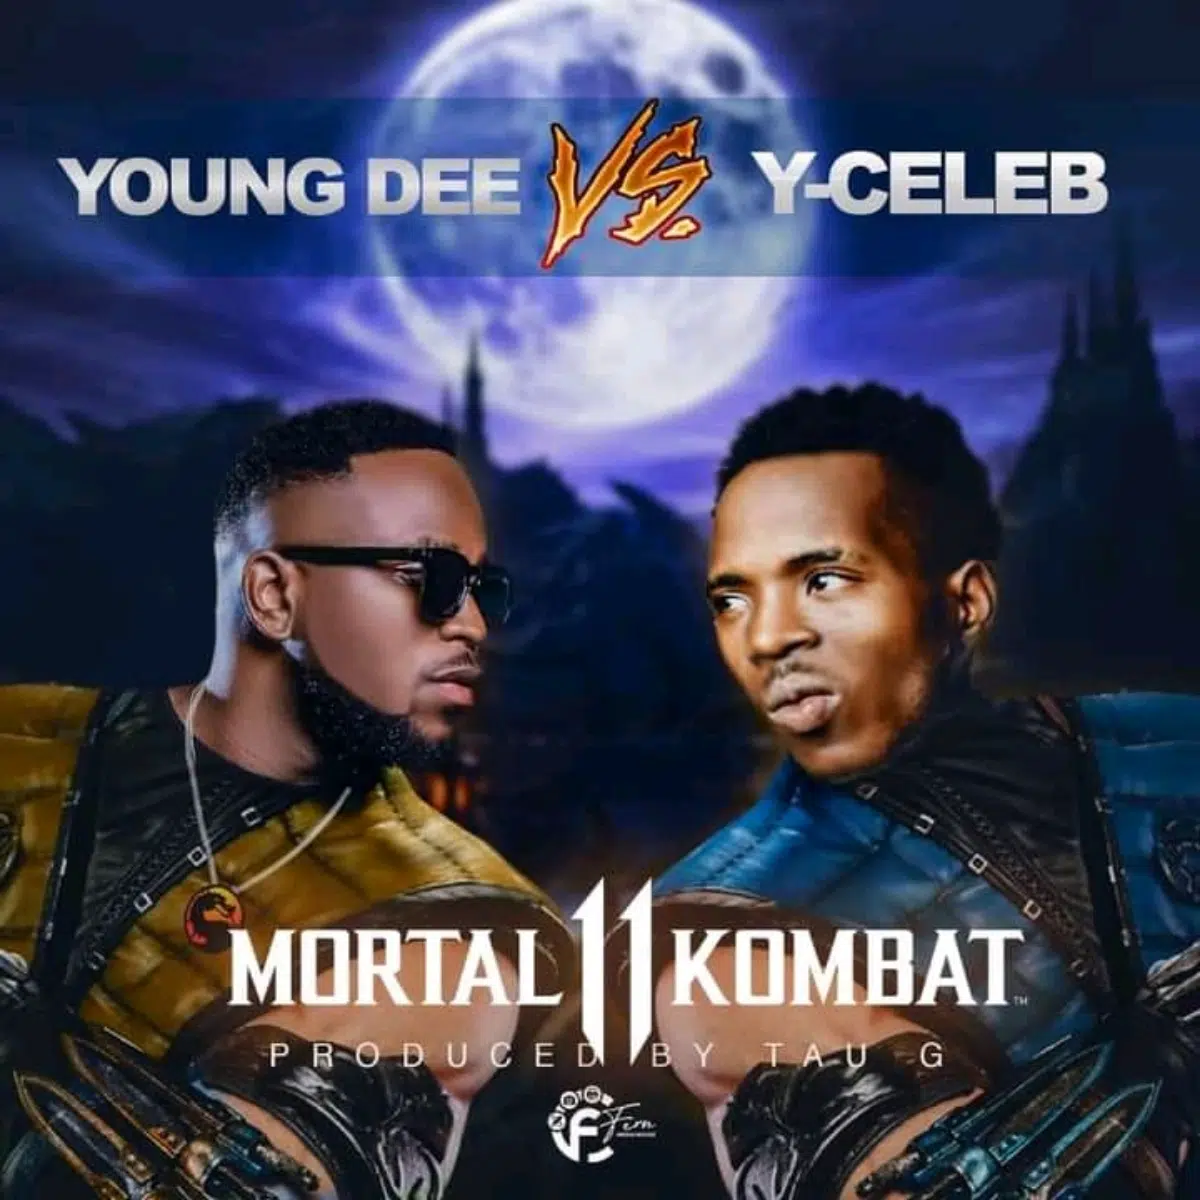 DOWNLOAD: Young Dee Vs Y Celeb – “Mortal Kombat” Mp3